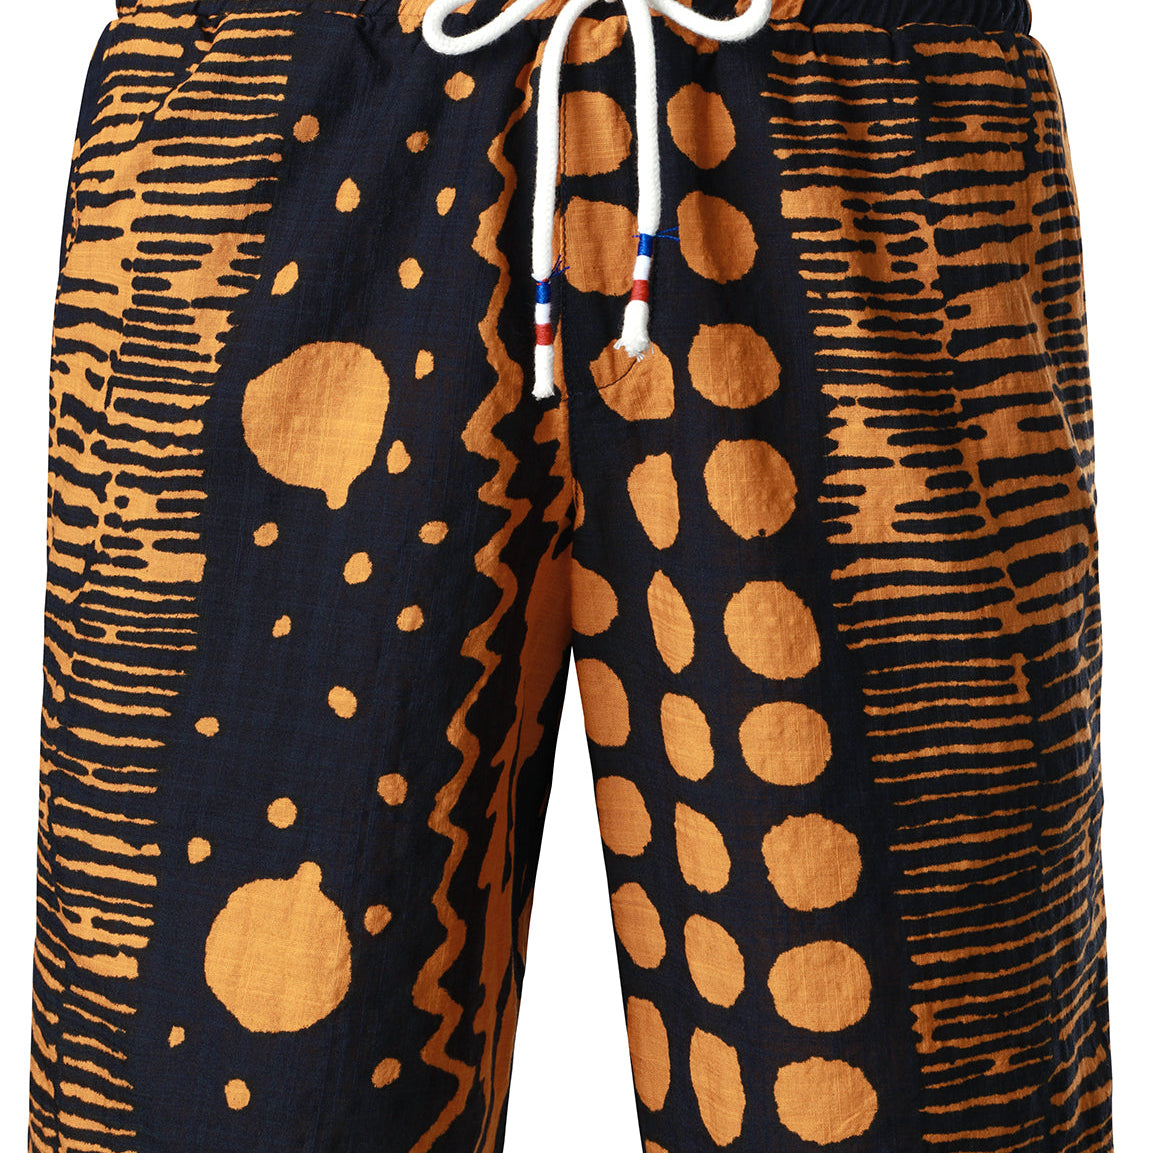 Men's Orange Casual Vintage Boho Breathable Cotton Shorts